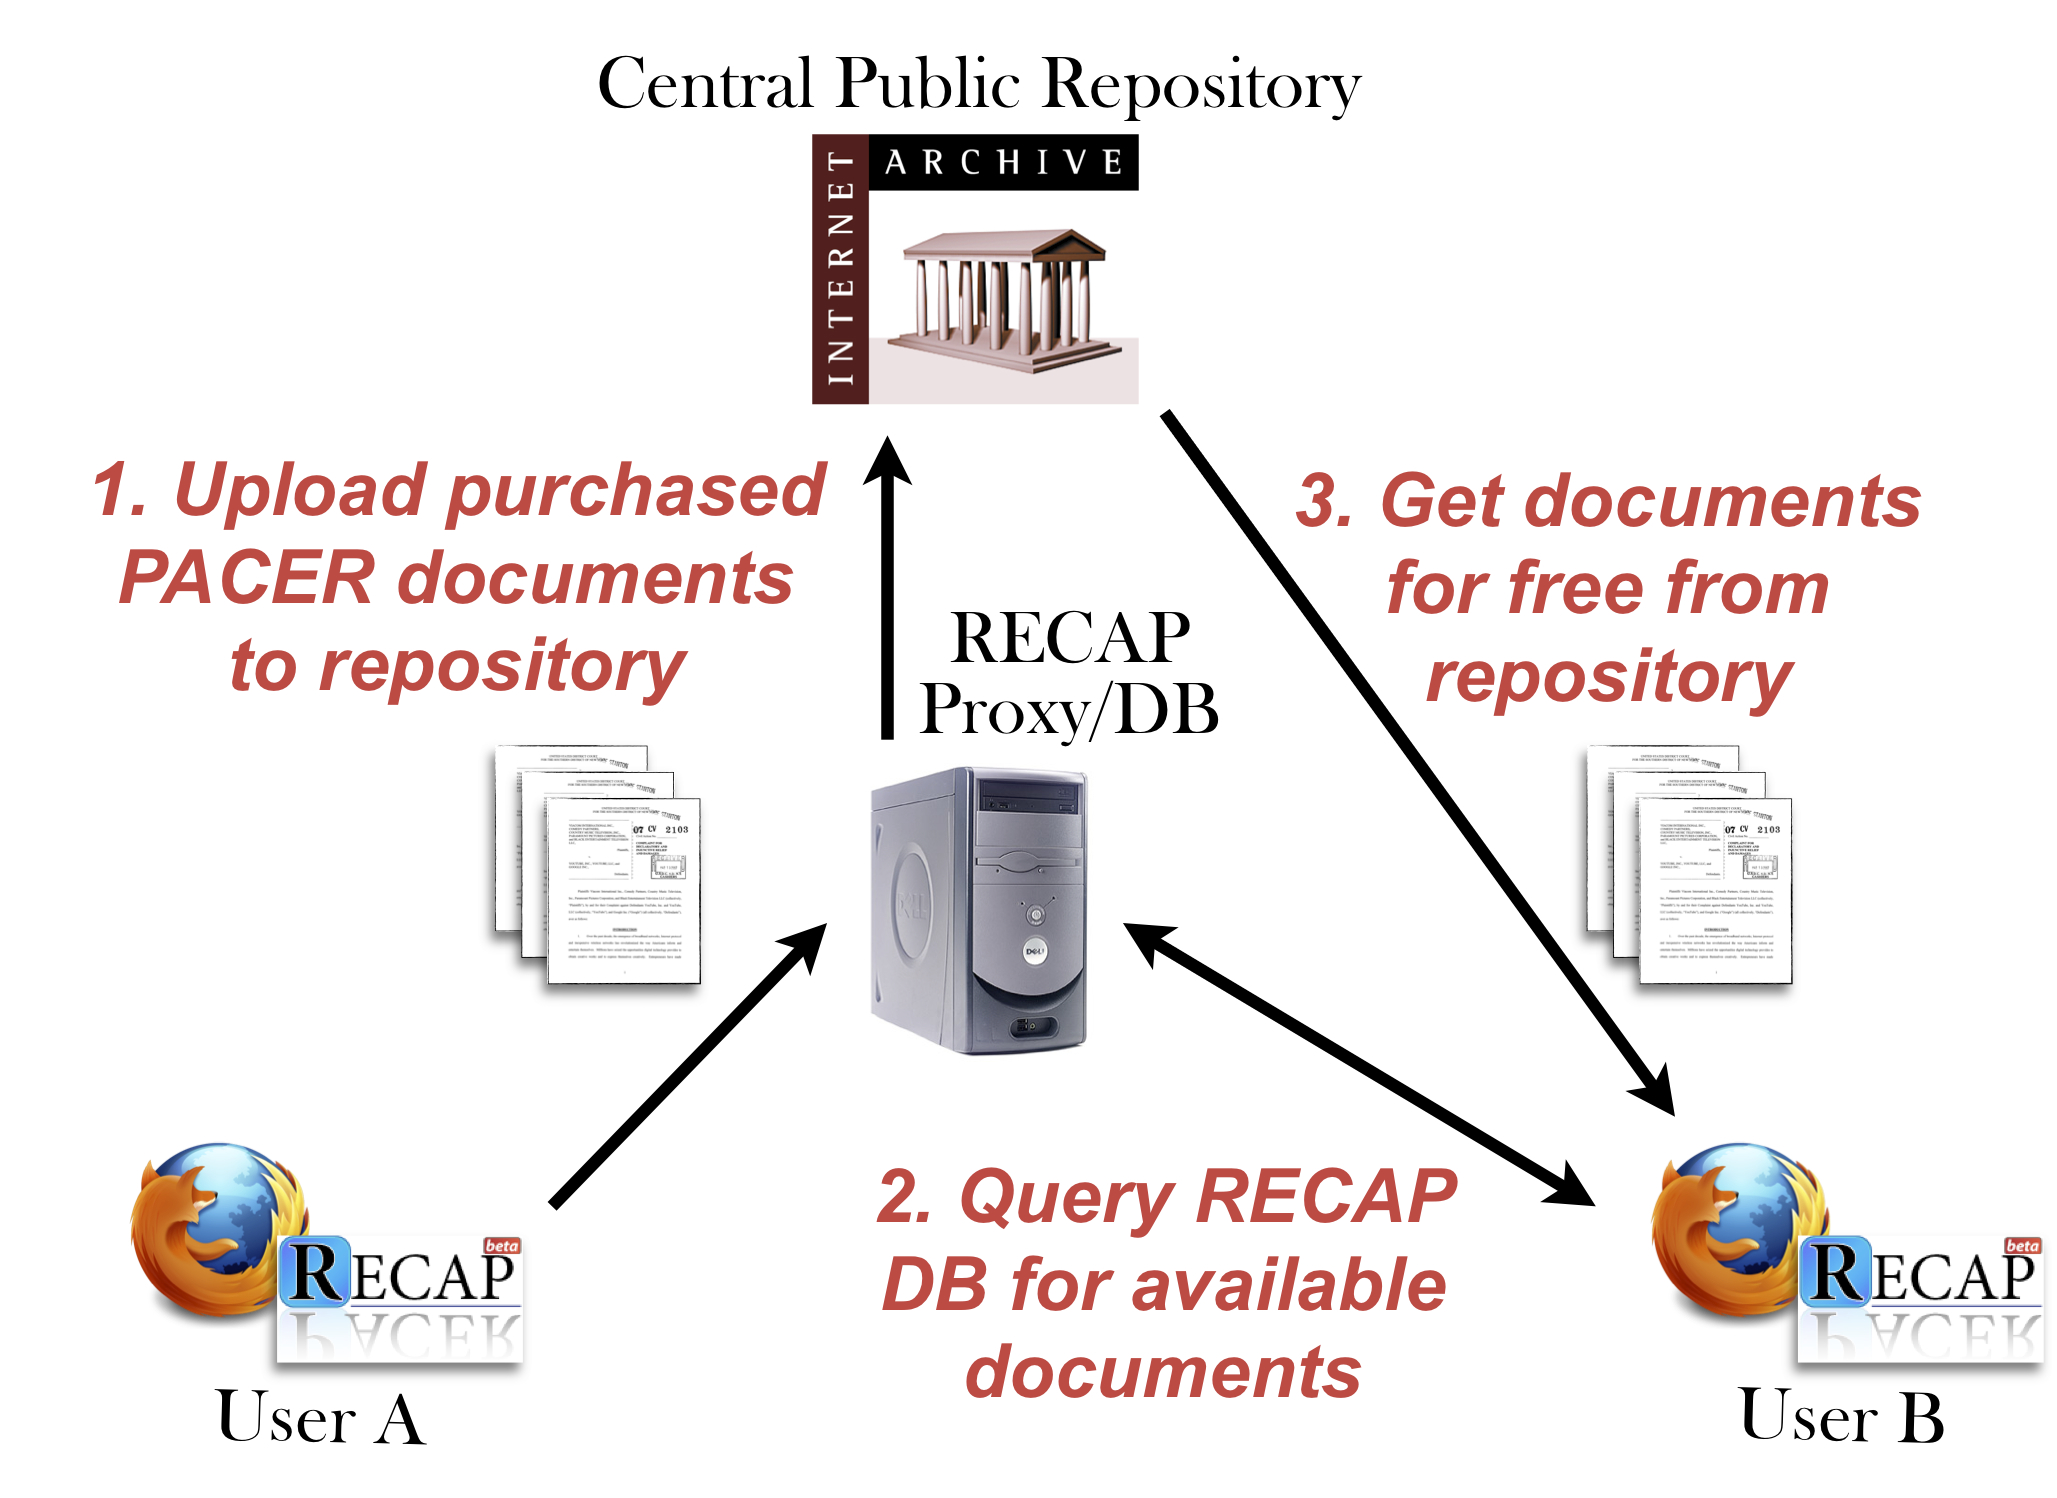 RECAP document sharing
model